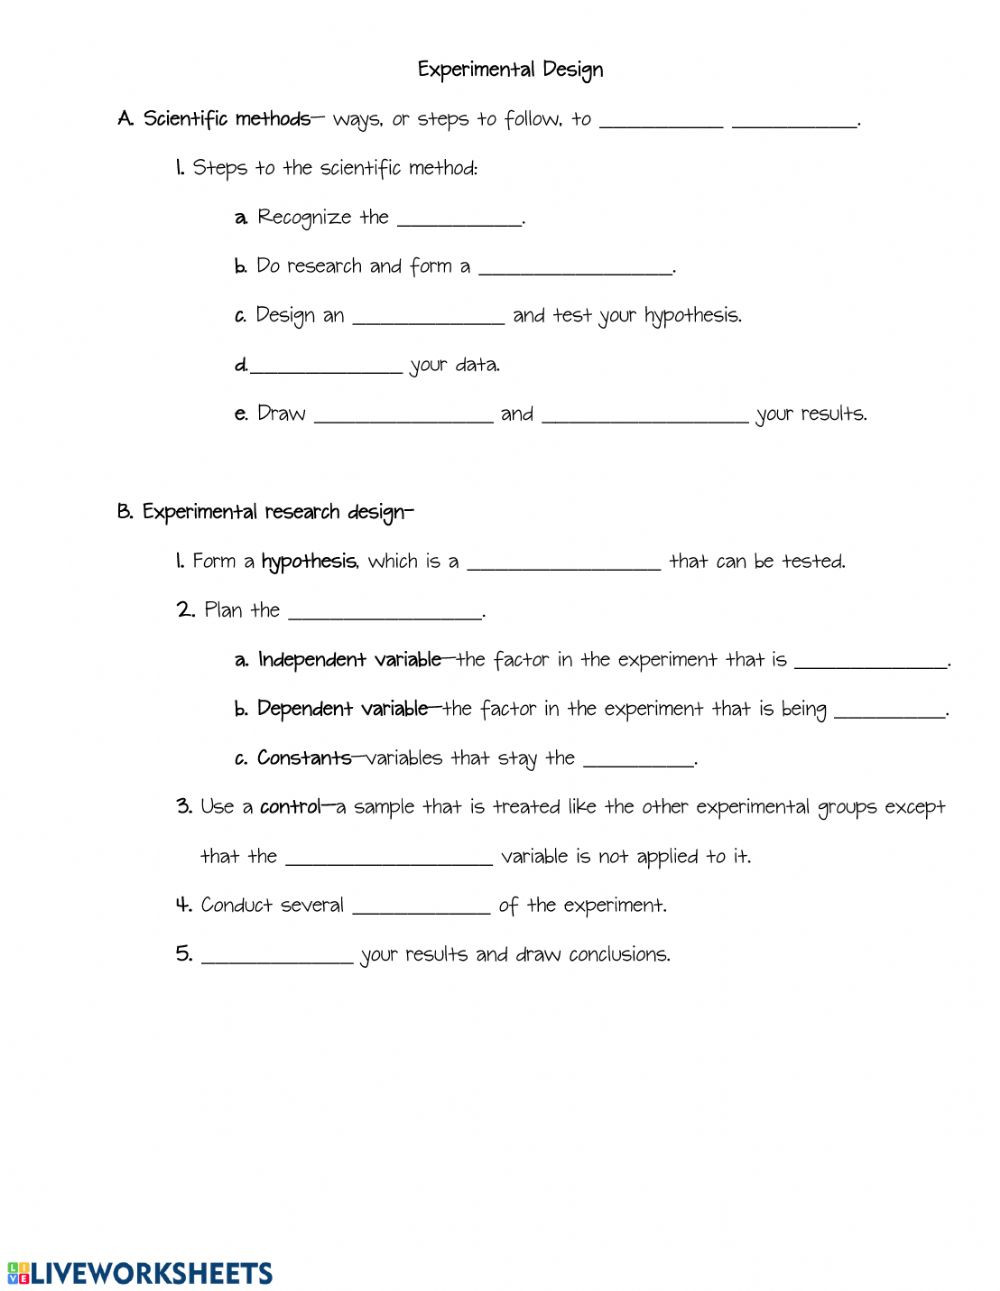 Experimental Design Worksheet Answers Experimental Design Guided Notes Interactive Worksheet